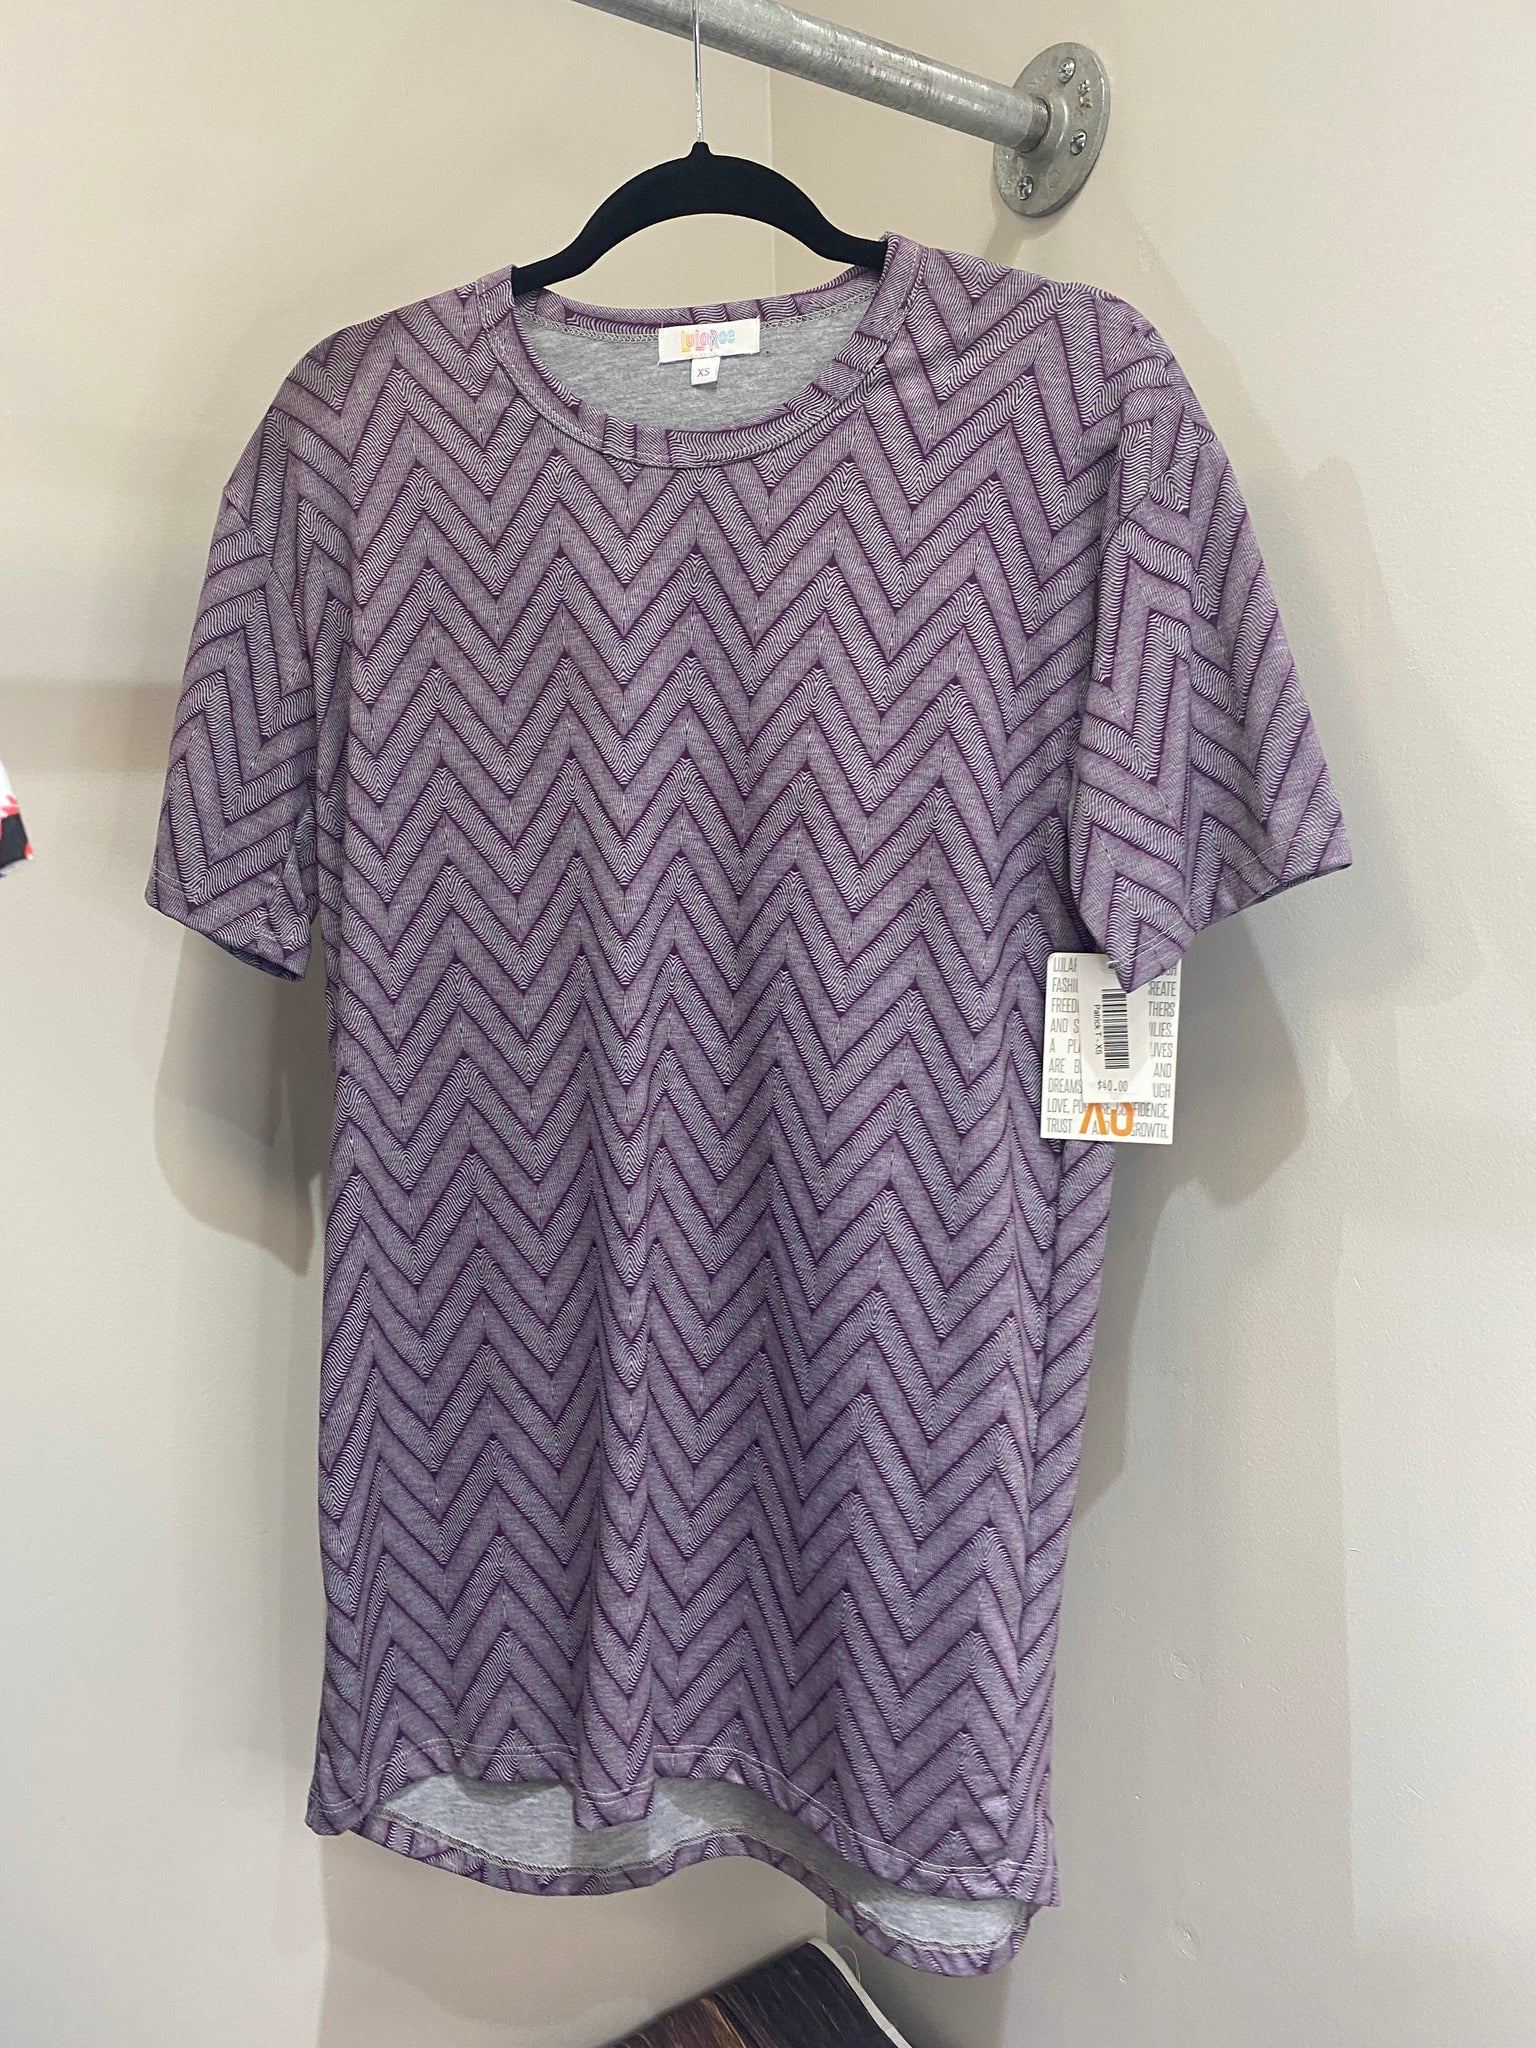 LuLaRoe Patrick Short Sleeve Men's Top Size XS Purple Chevron-Shirts & Tops-Sunshine and Wine Boutique